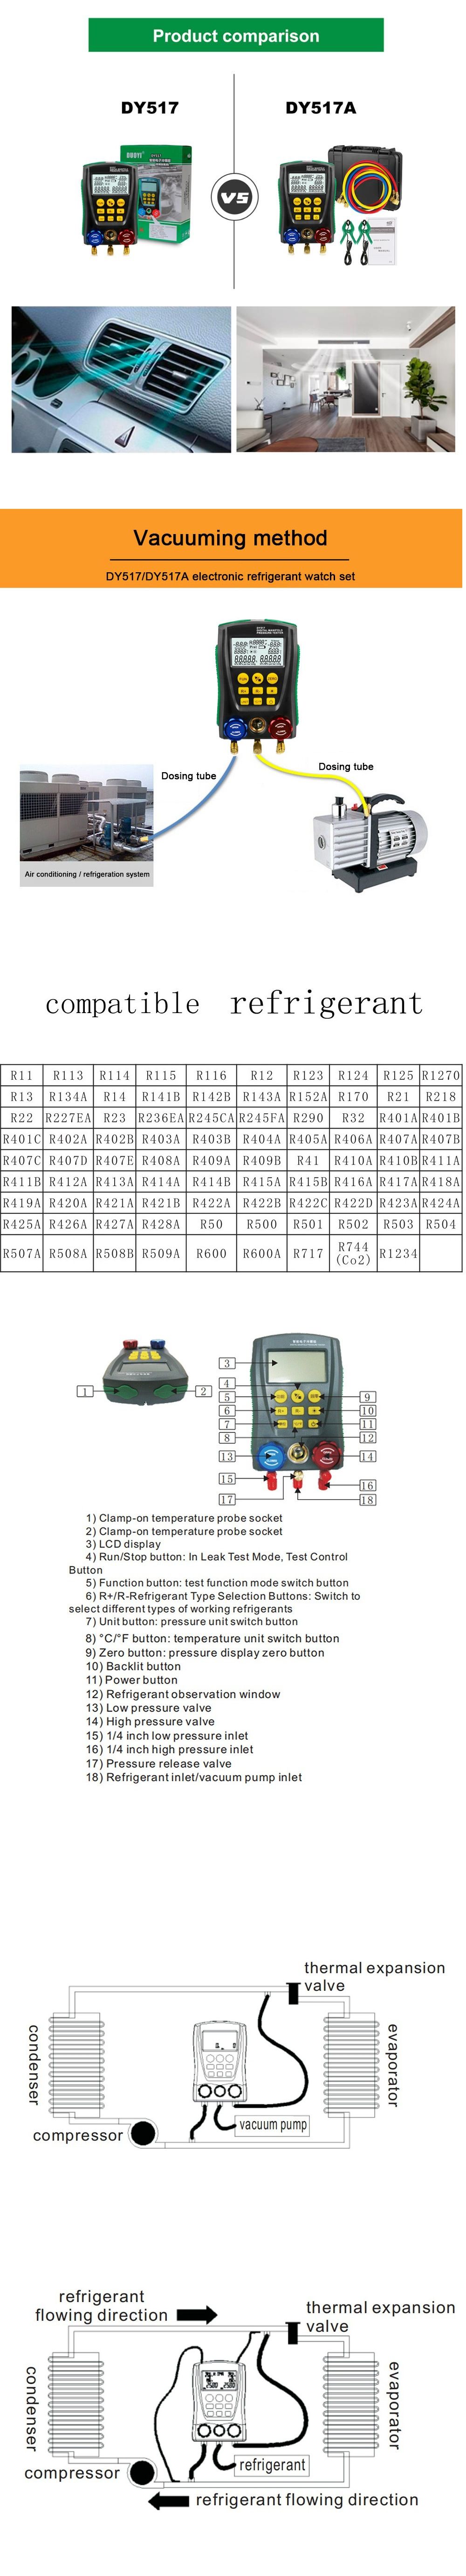 DUOYI-DY517-Refrigeration-Digital-Manifold-Pressure-Gauge-Set-Vacuum-Pressure-Meter-Testing-HVAC-Tem-1640222